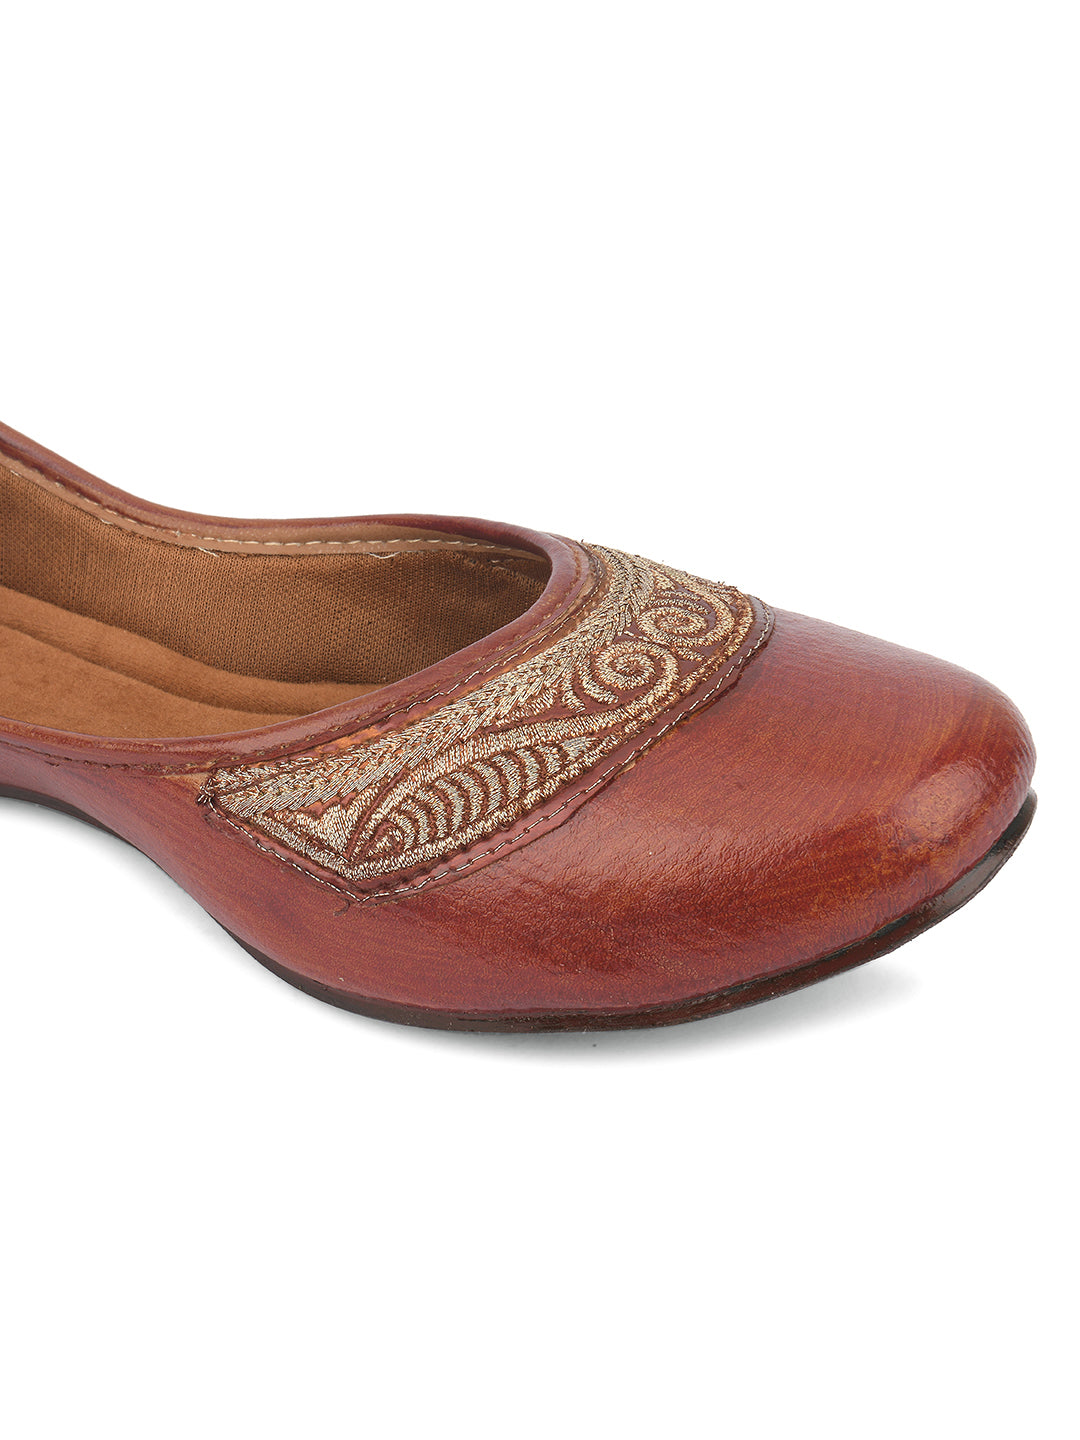 DESI COLOUR Women Brown Embellished Leather Ethnic Mojaris Flats